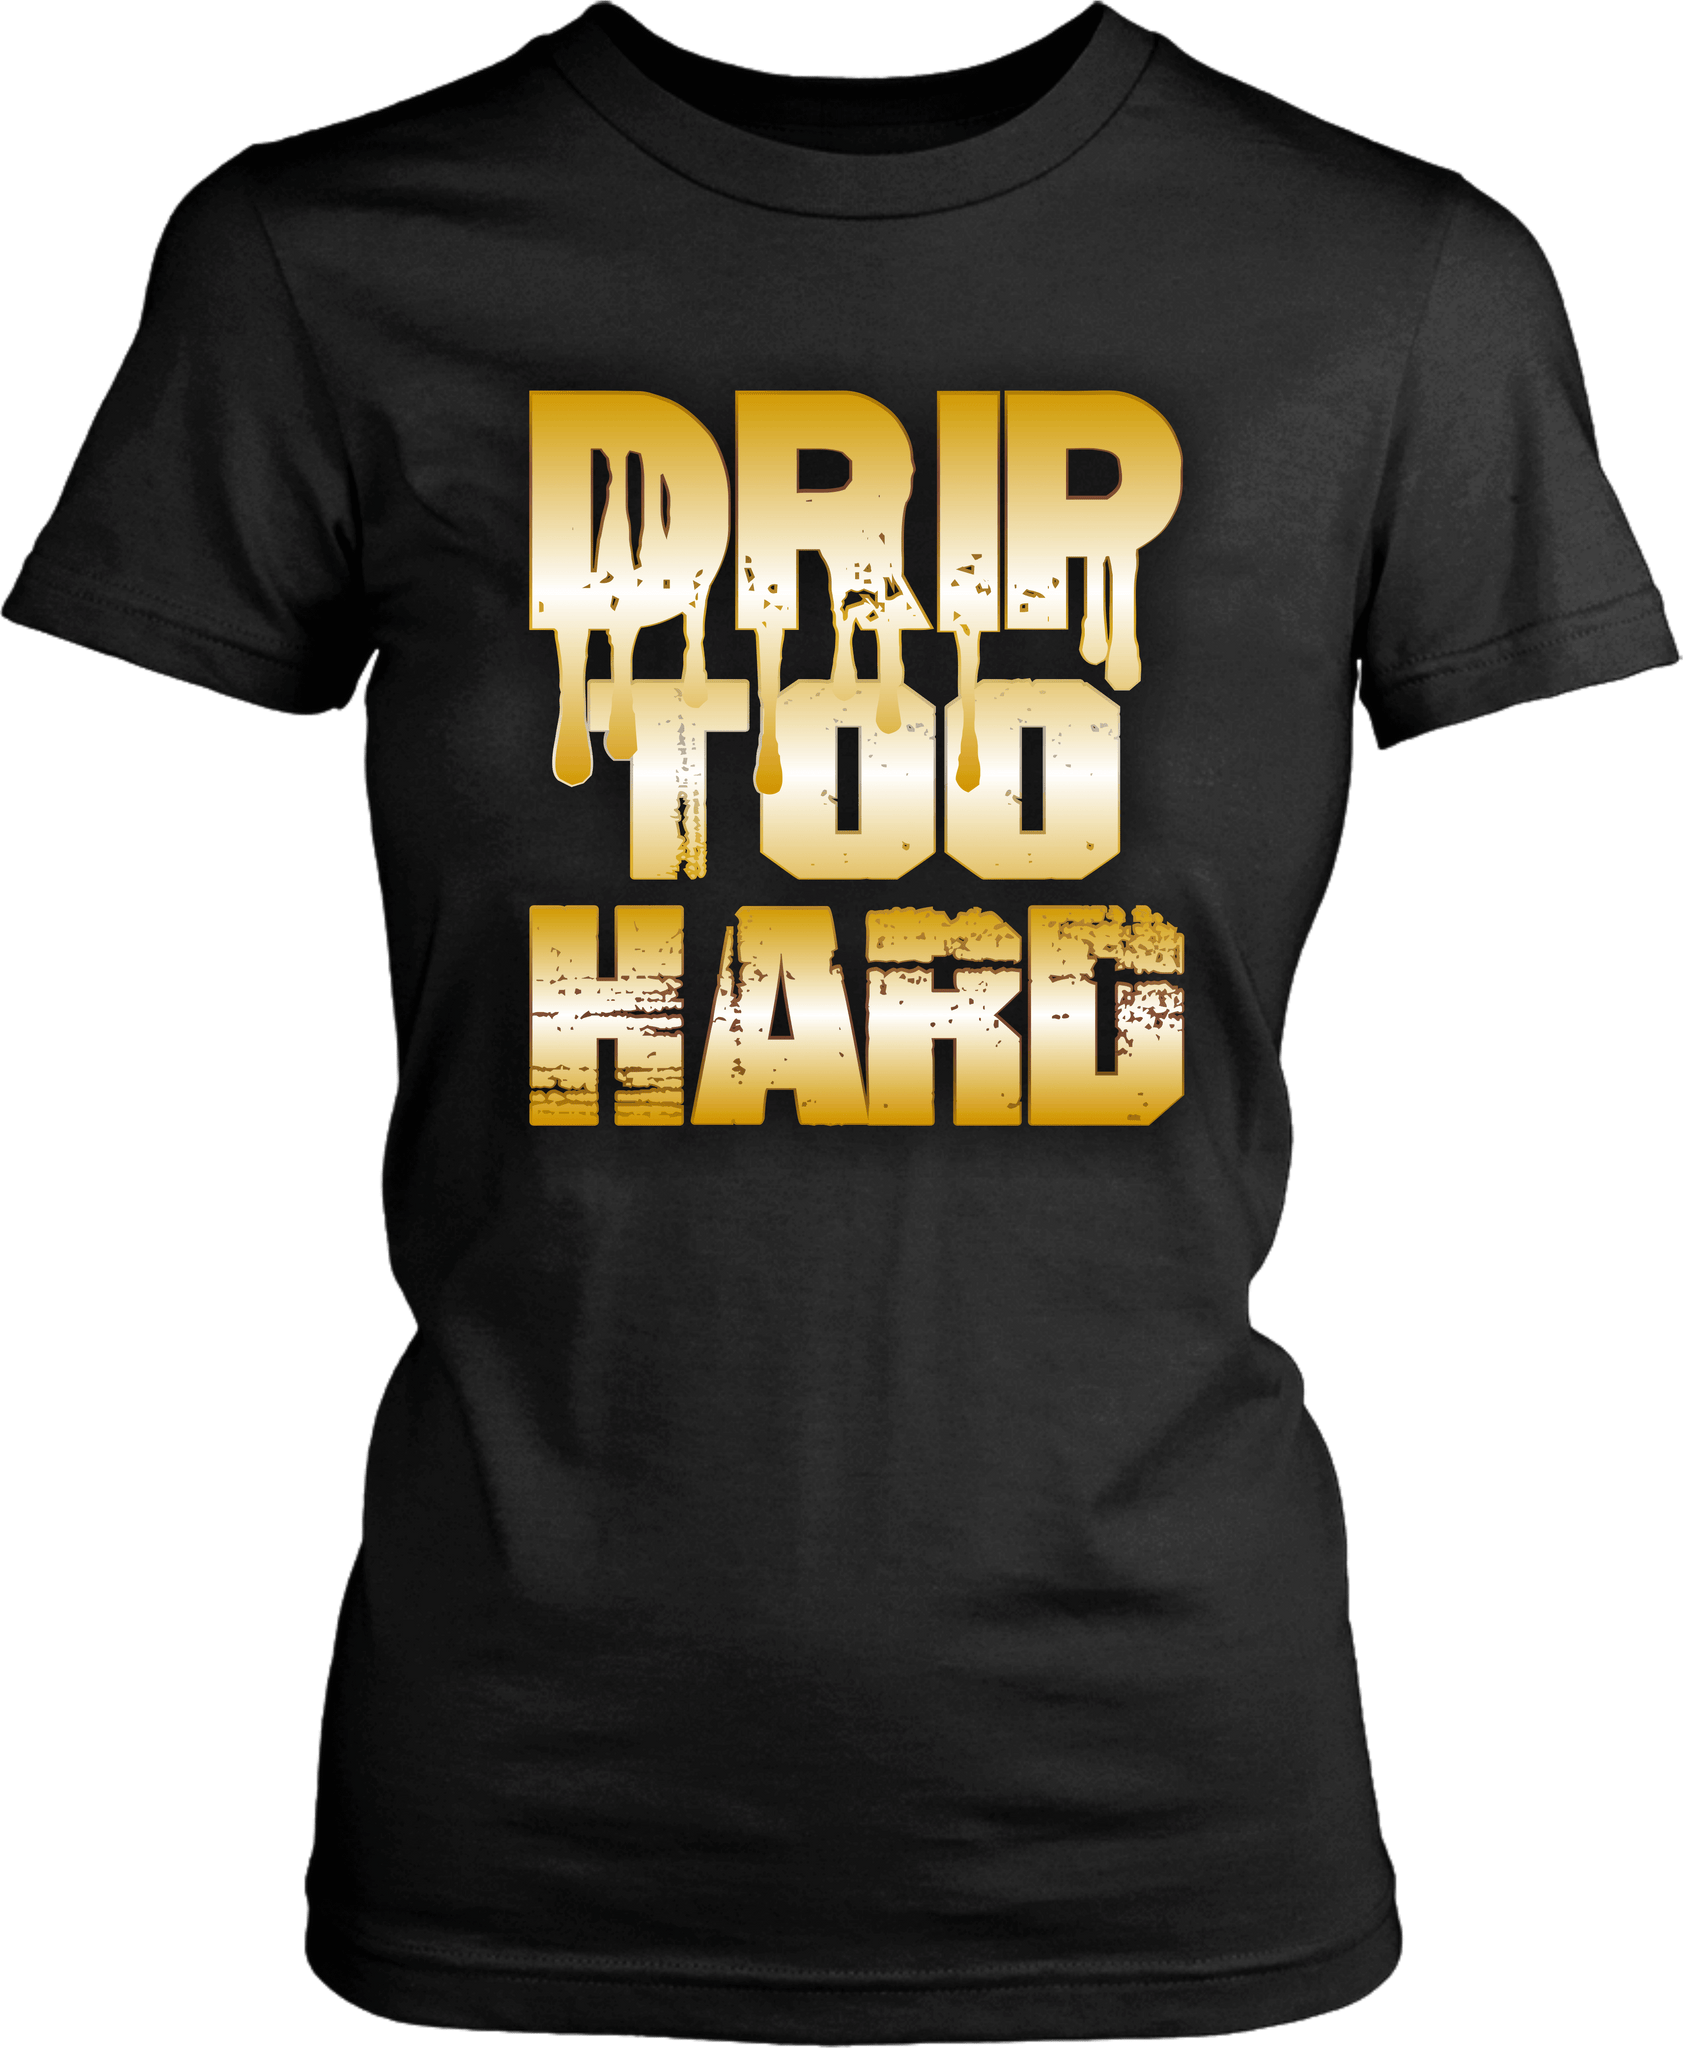 Women's Cool T-Shirts Drip Too Hard shirts Unisex New Fashion t shirt - xpertapparel